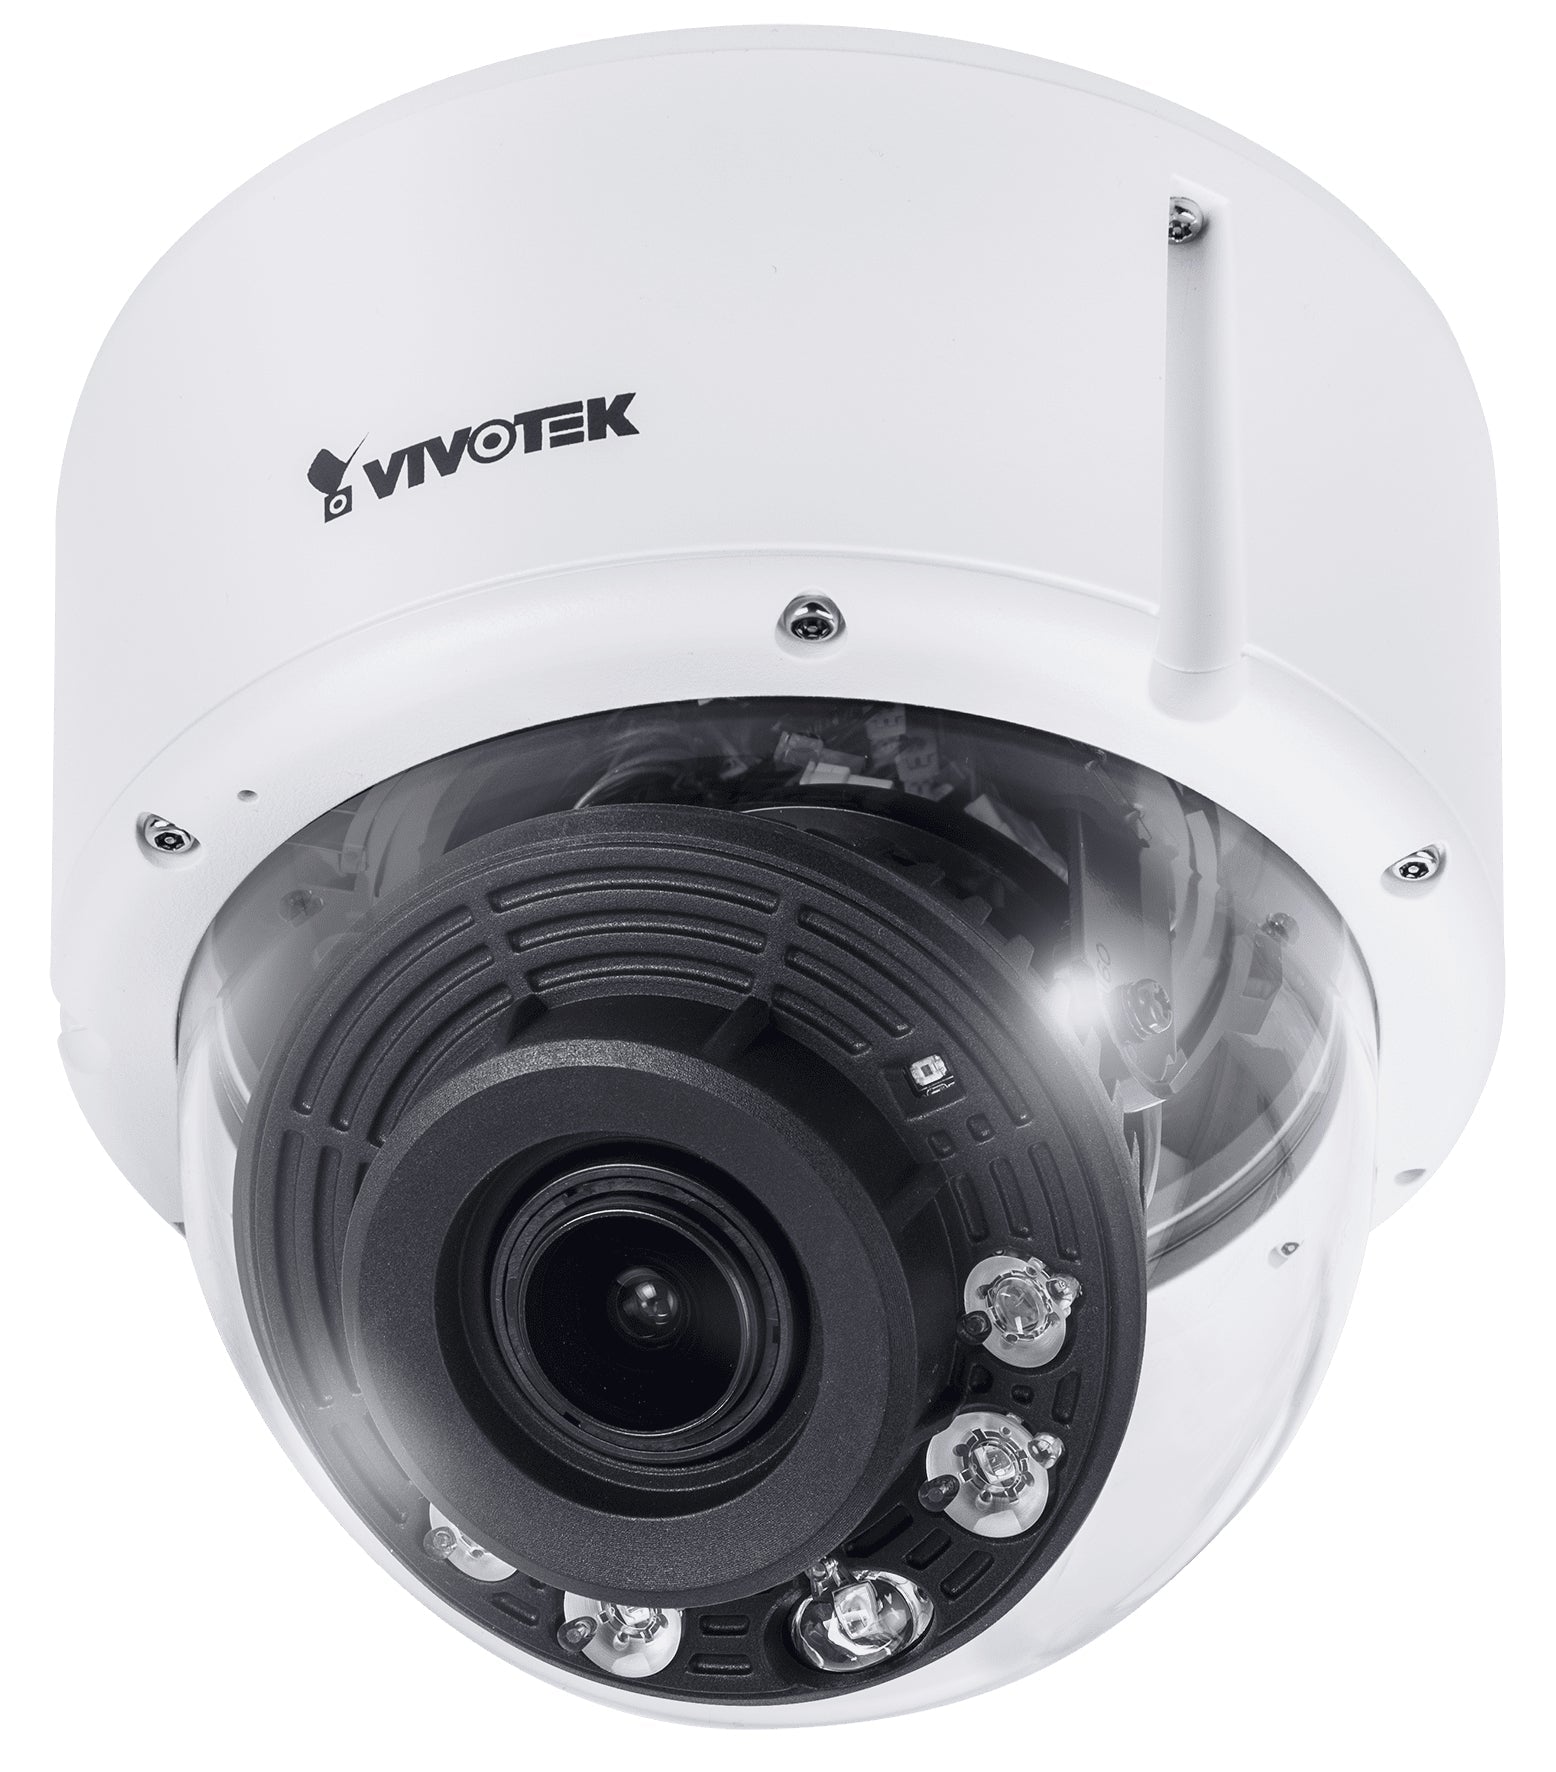 Vivotek Fd9391-Ehtv Security Camera Ip Security Camera Outdoor Dome 3840 X 2160 Pixels Ceiling